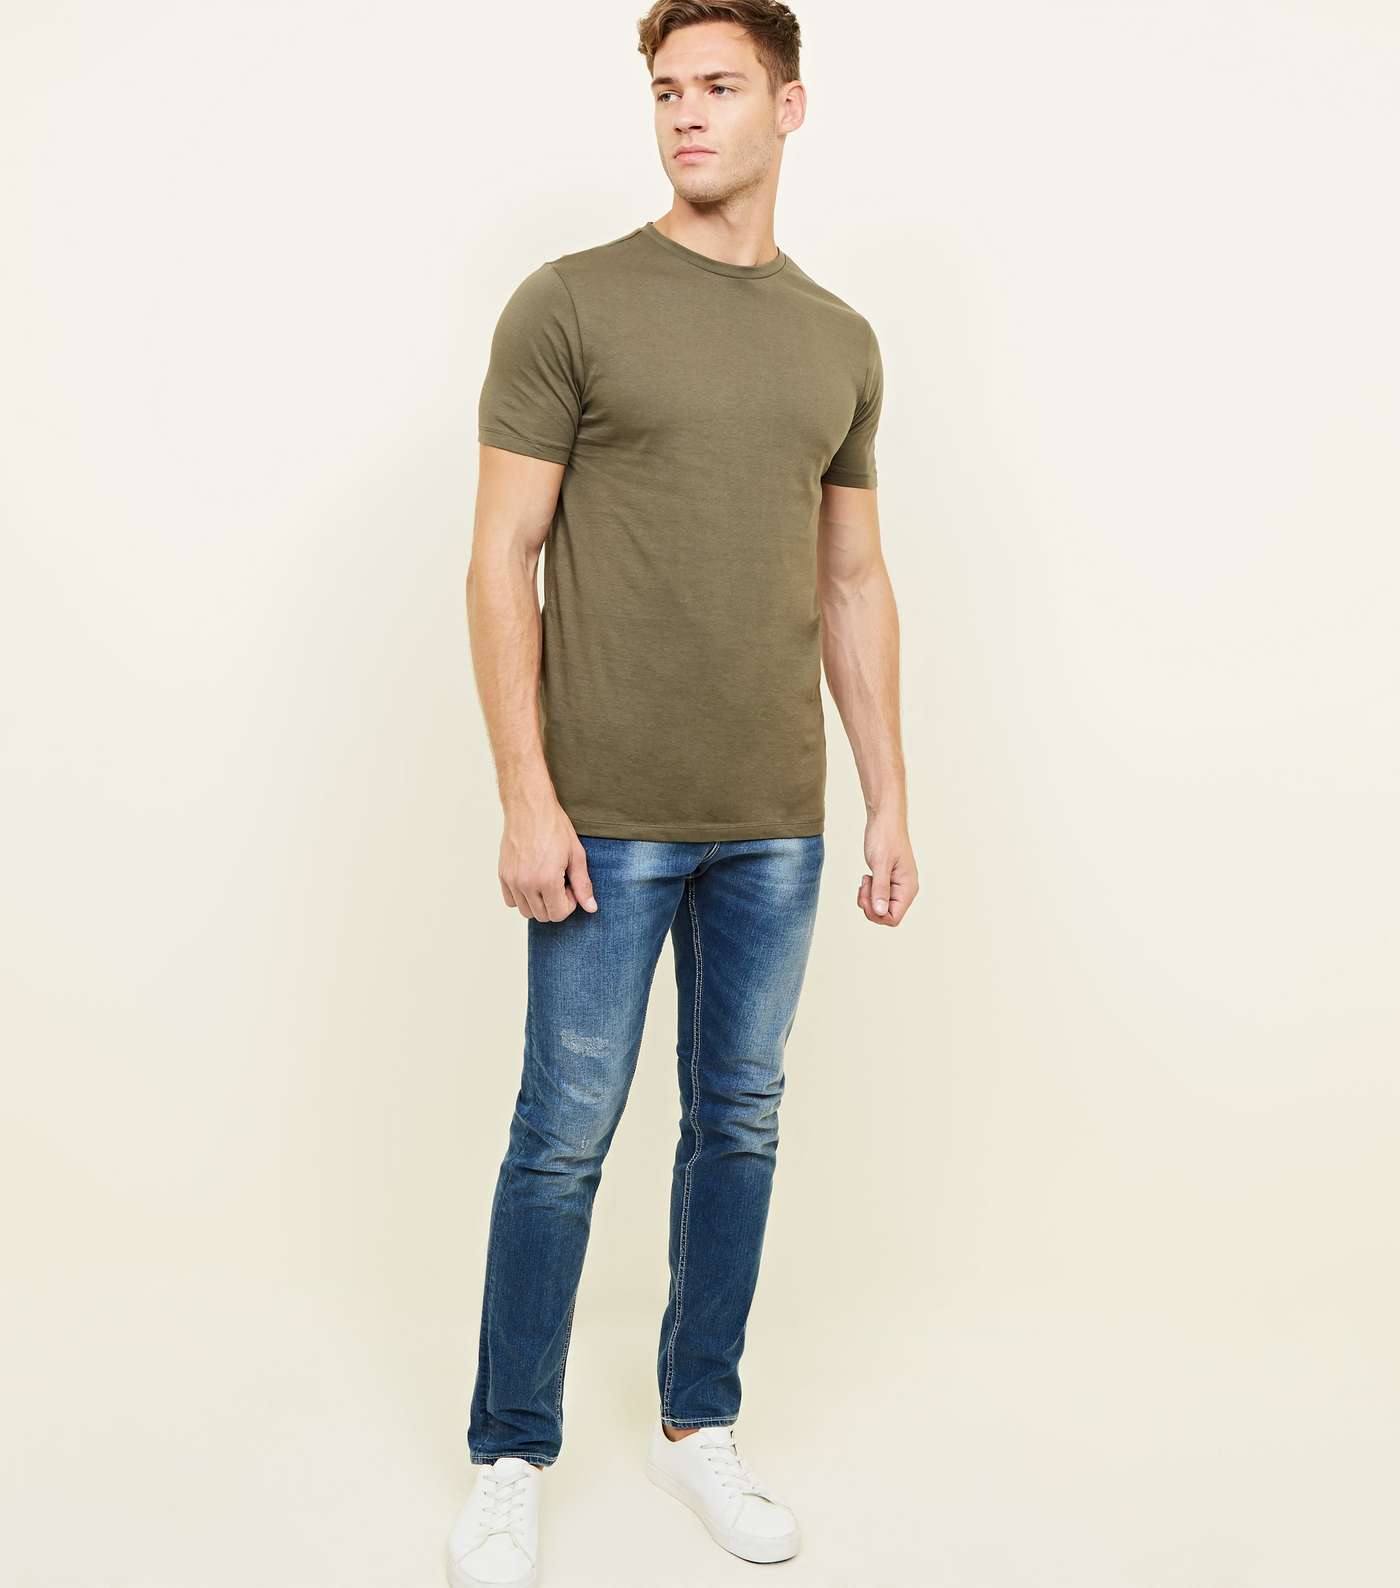 Khaki Short Sleeve Muscle Fit T-Shirt Image 2